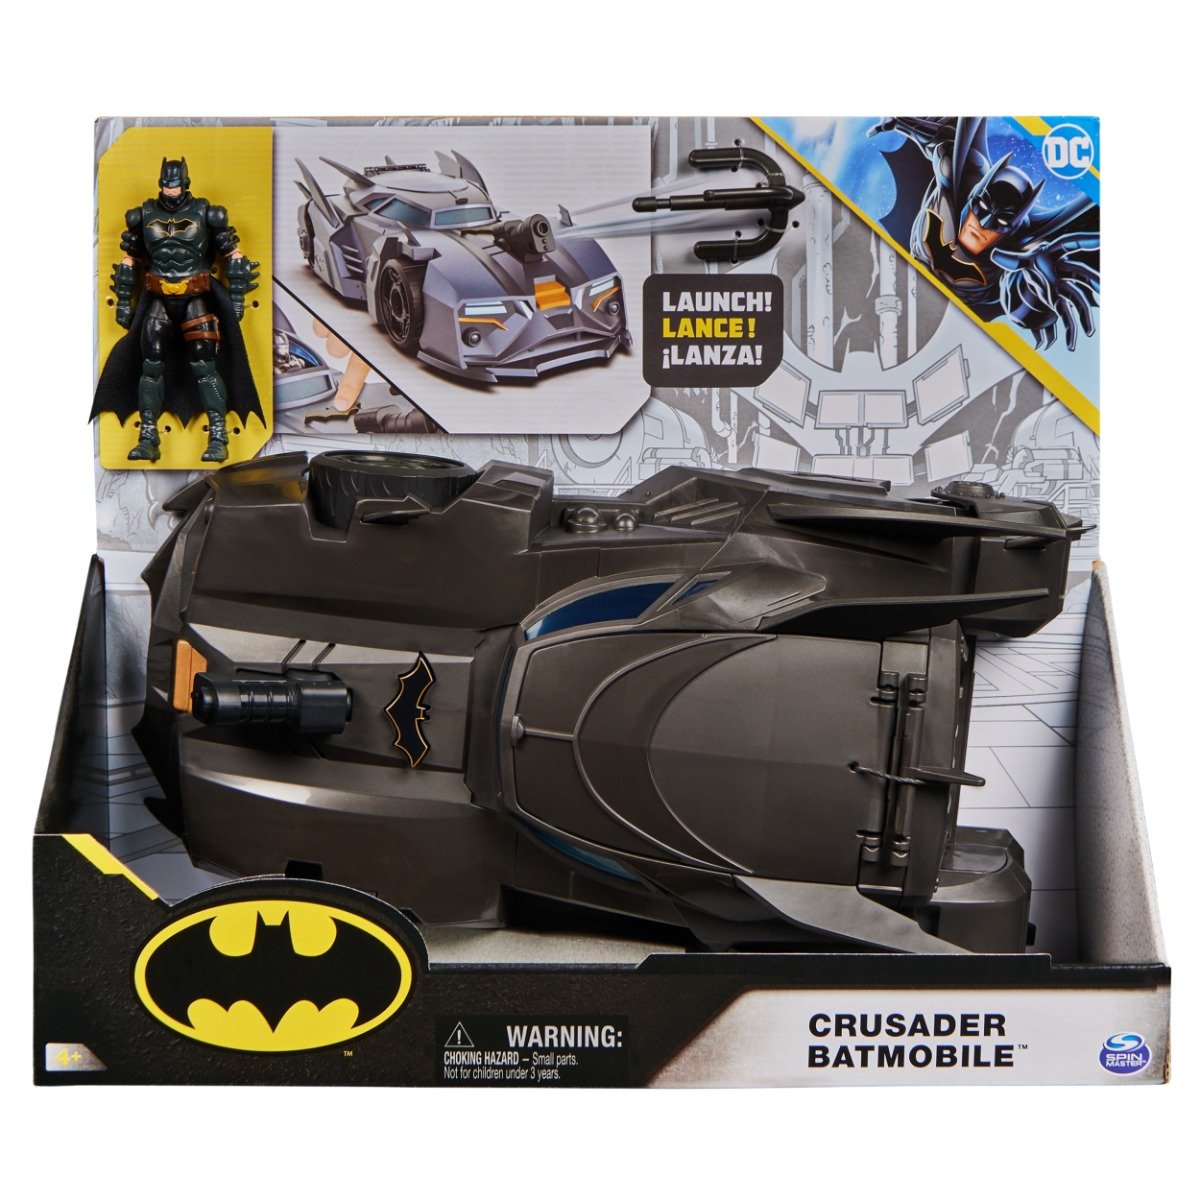 Set de joaca masina si figurina, Batman, Batmobil Crusader, 20142921